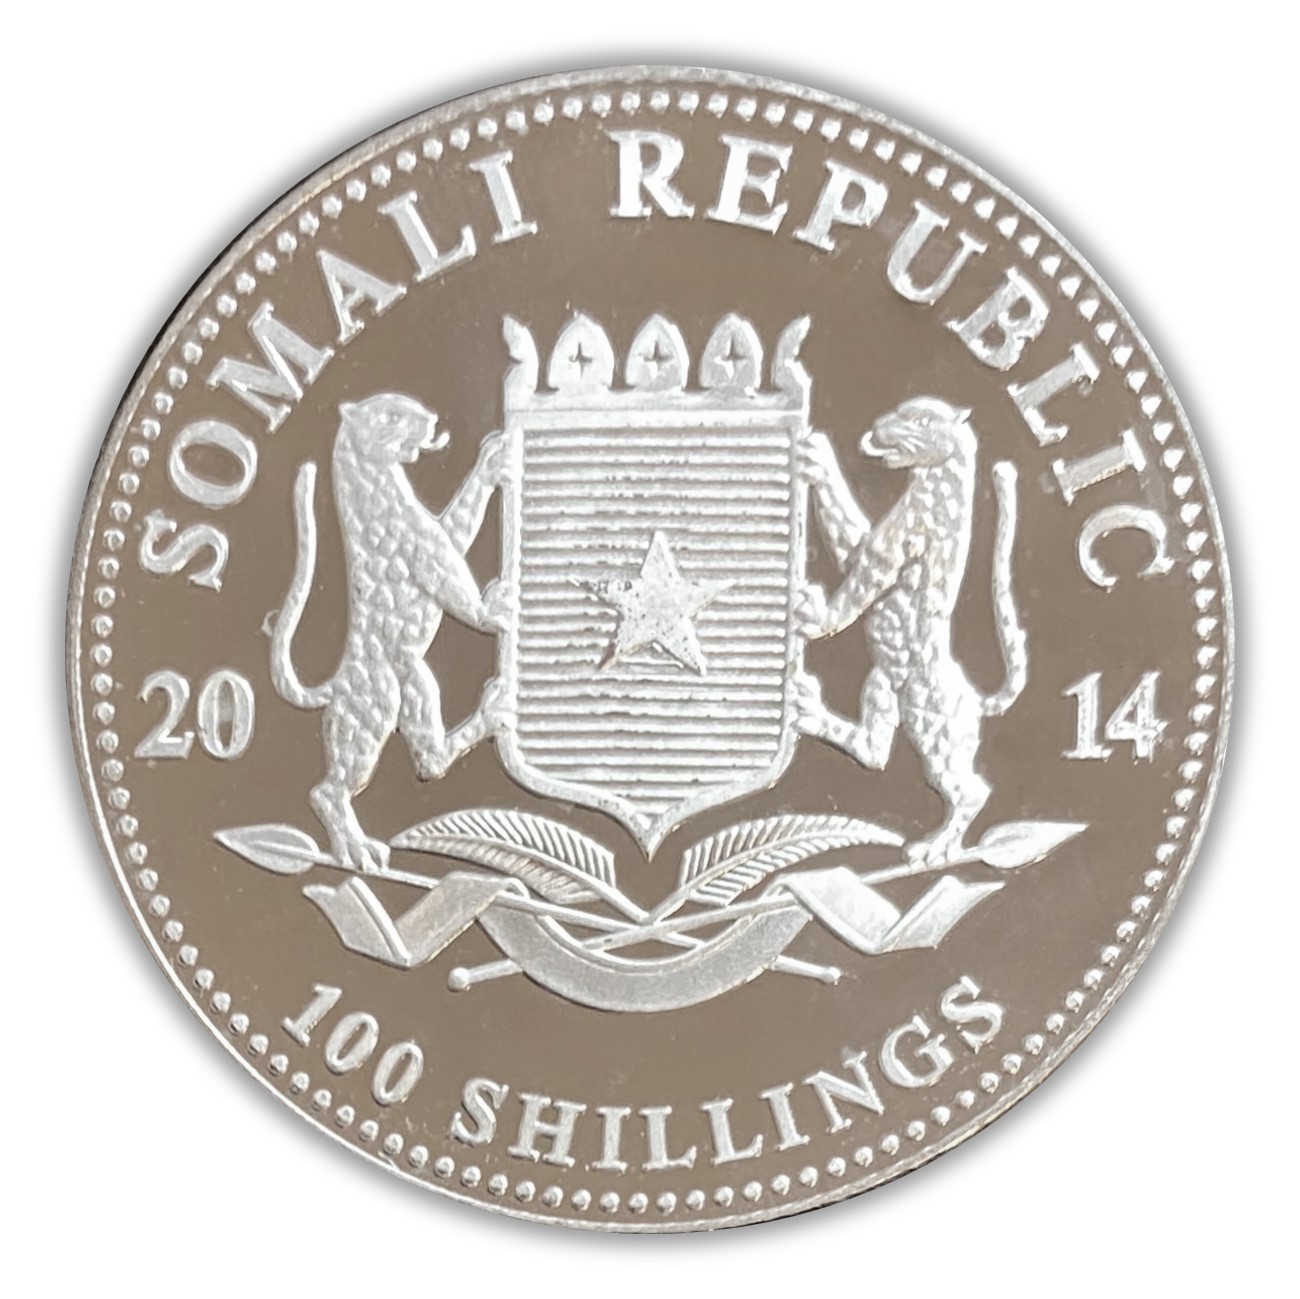 2014 Somalia Elephants 1 oz Silver Coin